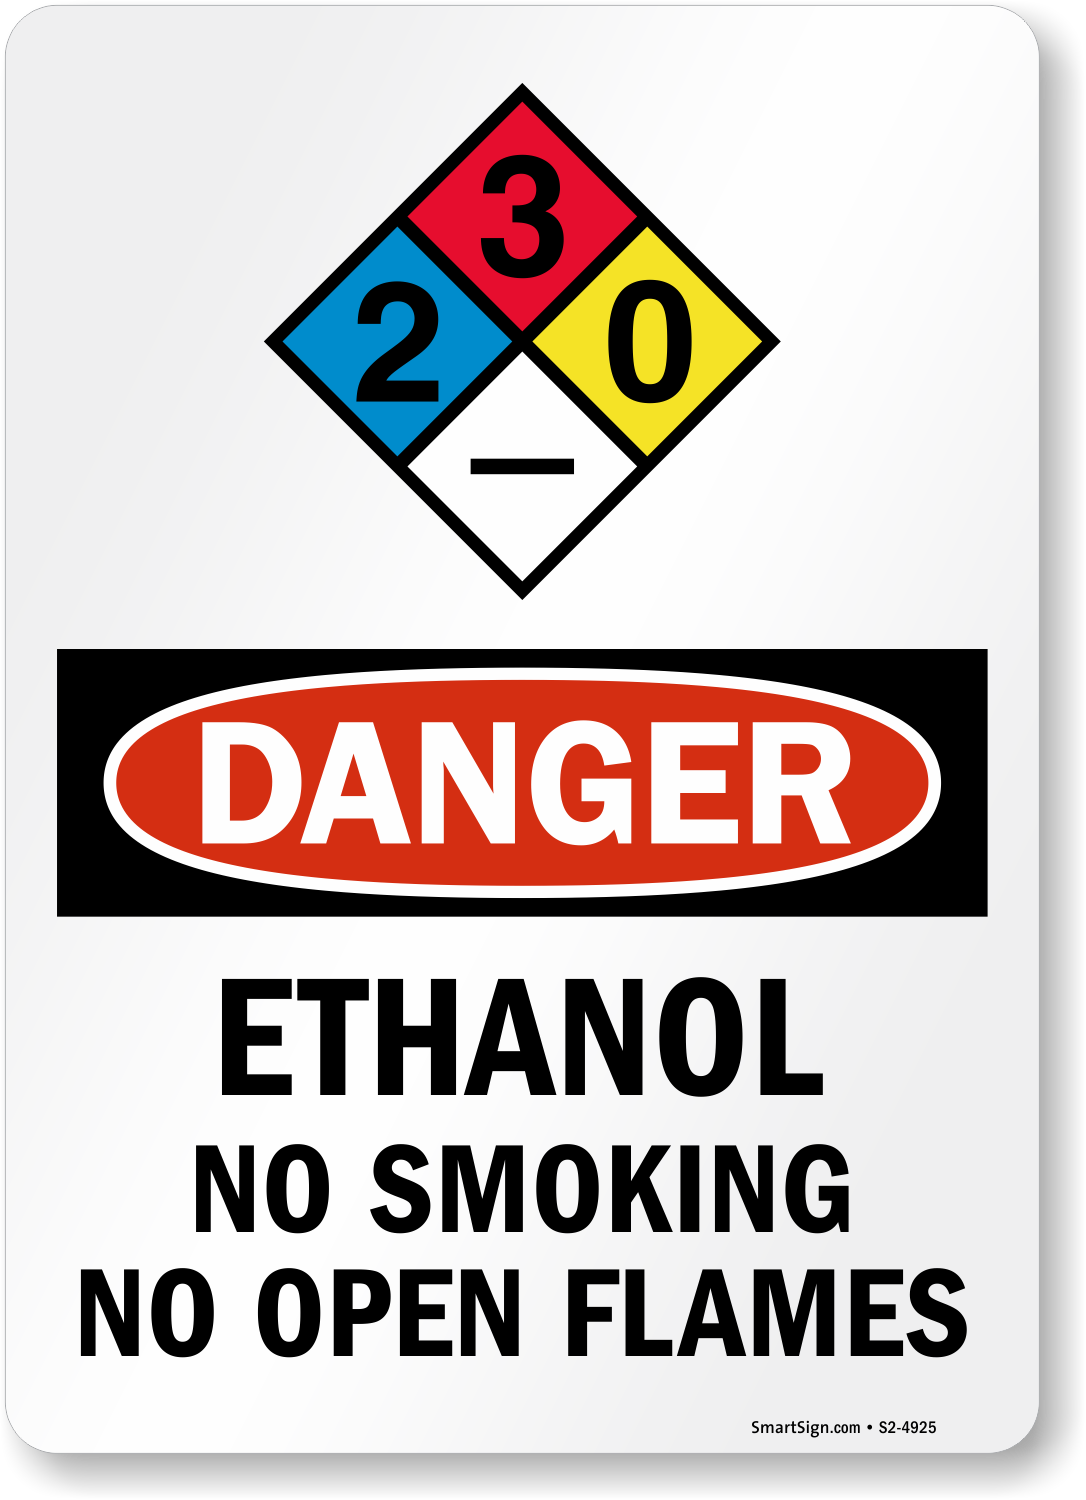 Ethanol Sign, SKU: S2-4925